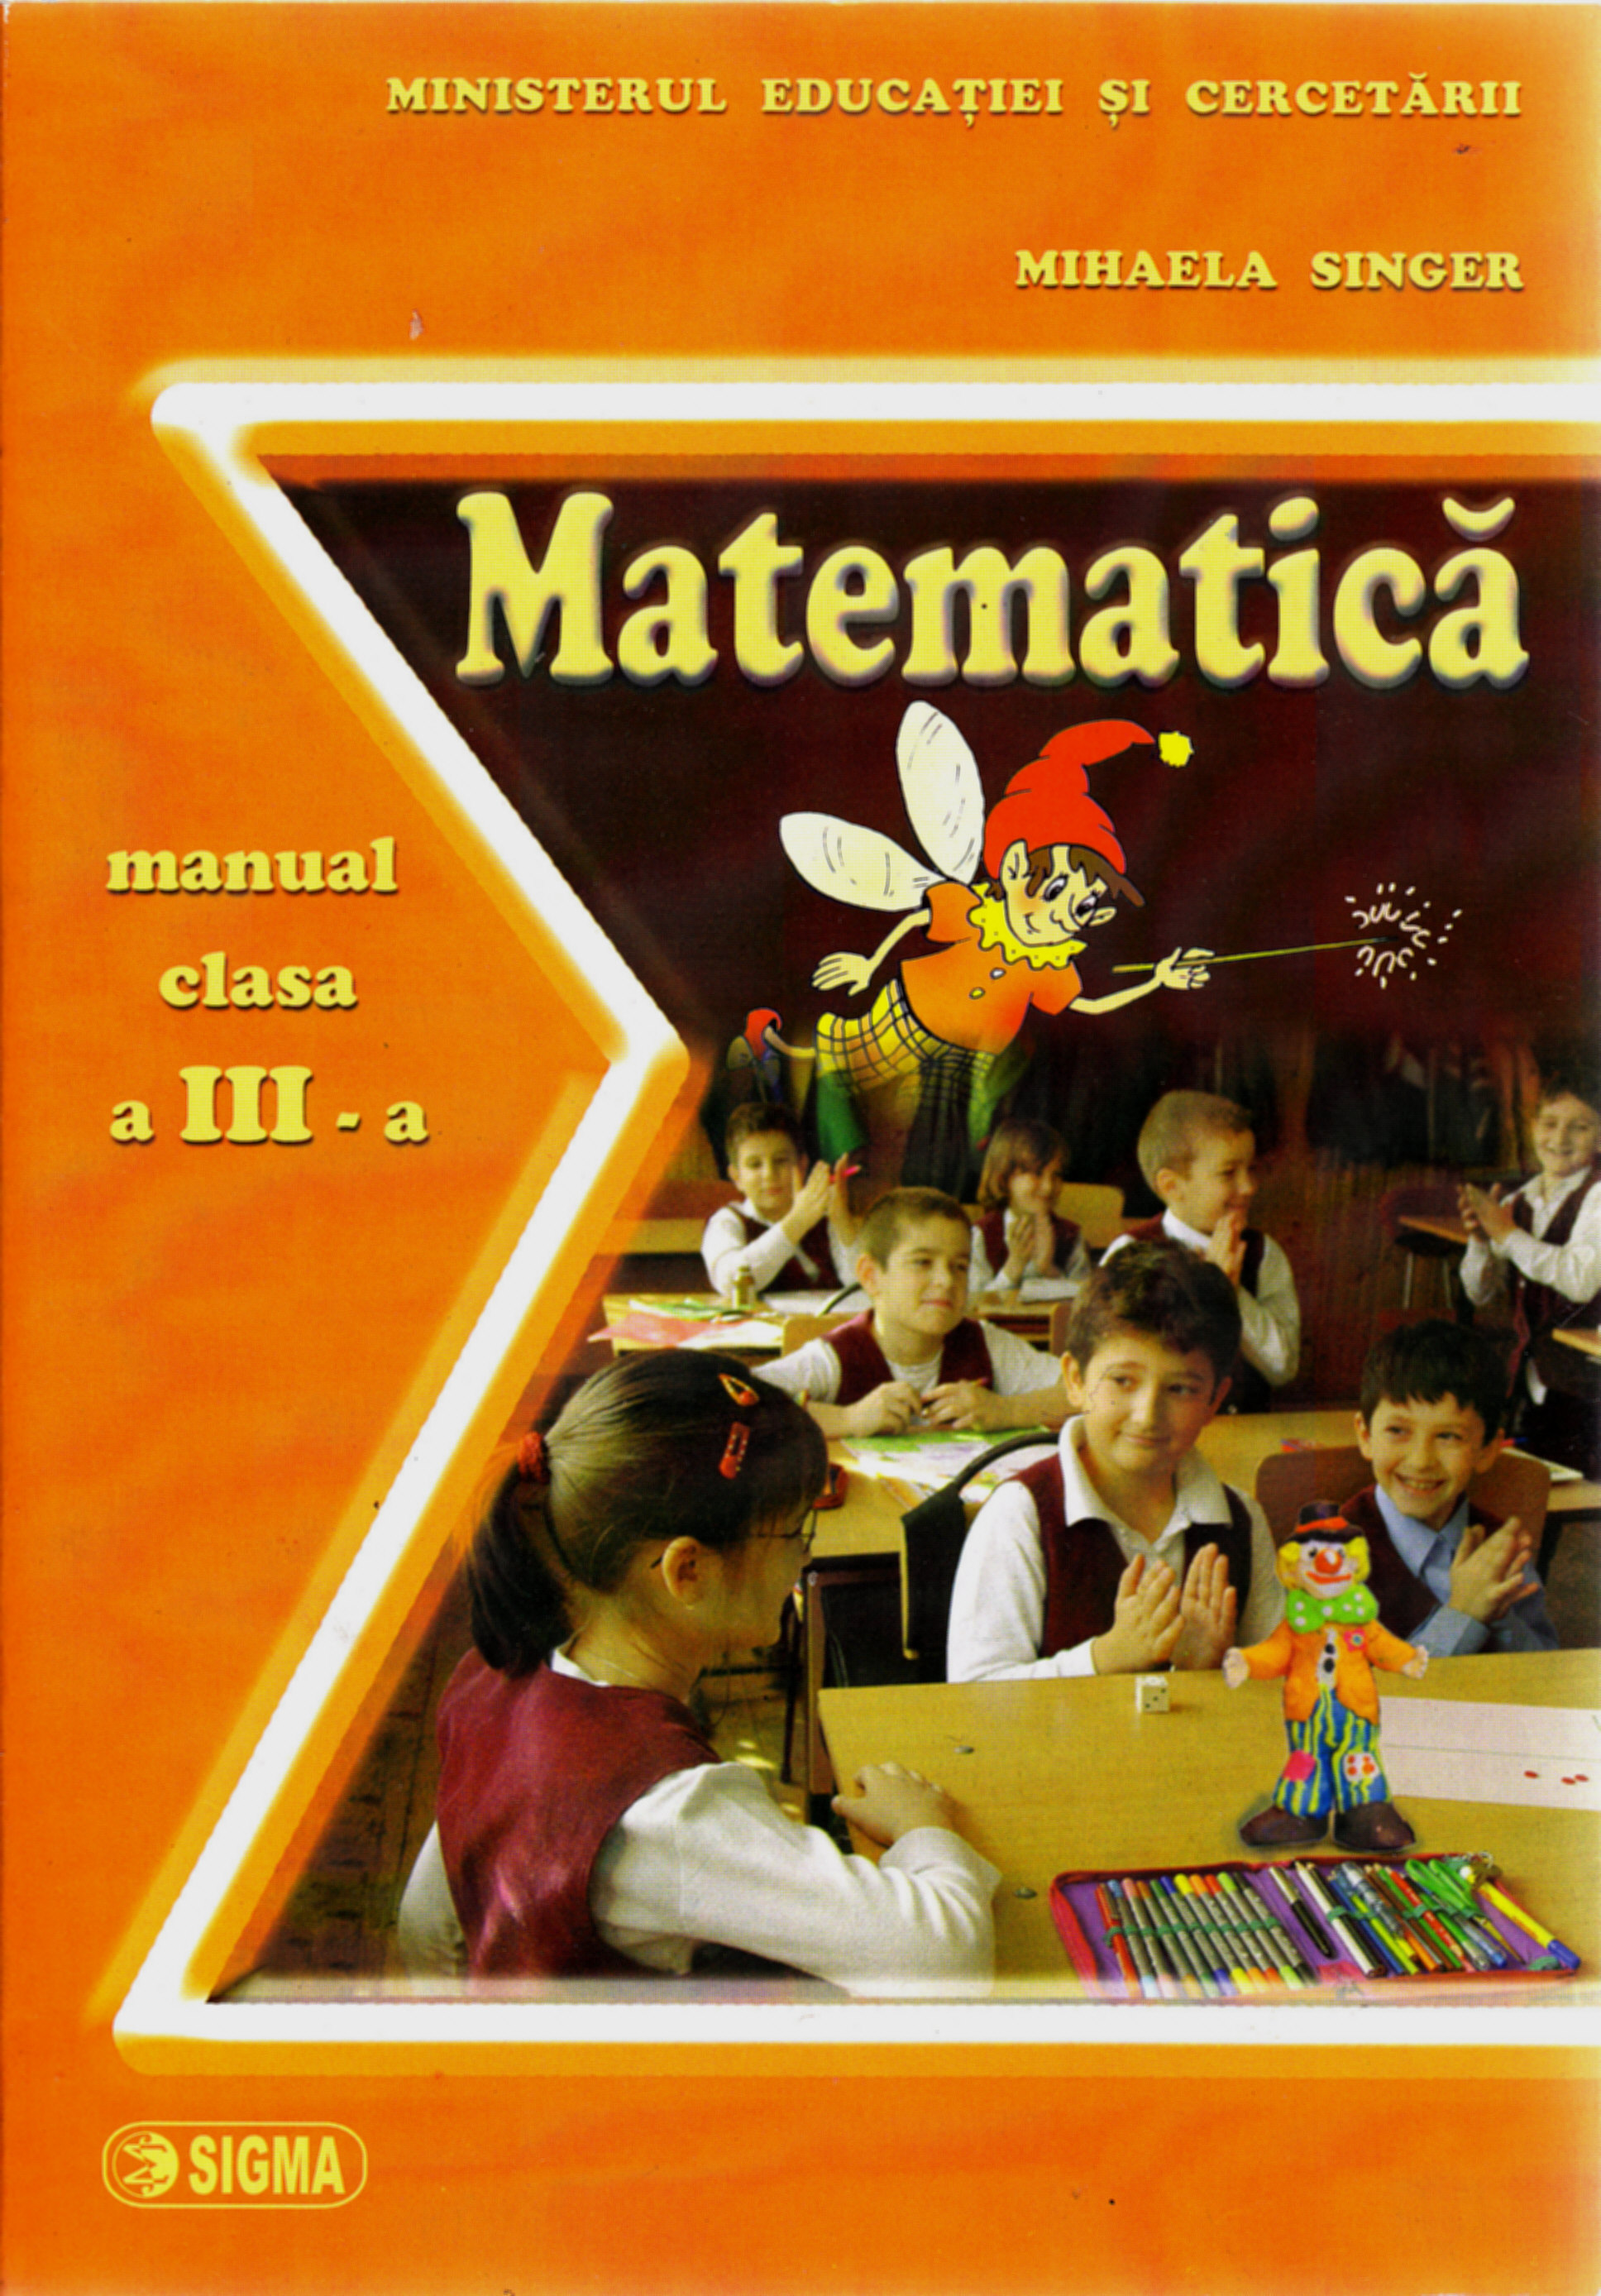 Manual matematica clasa 3 - Mihaela Singer